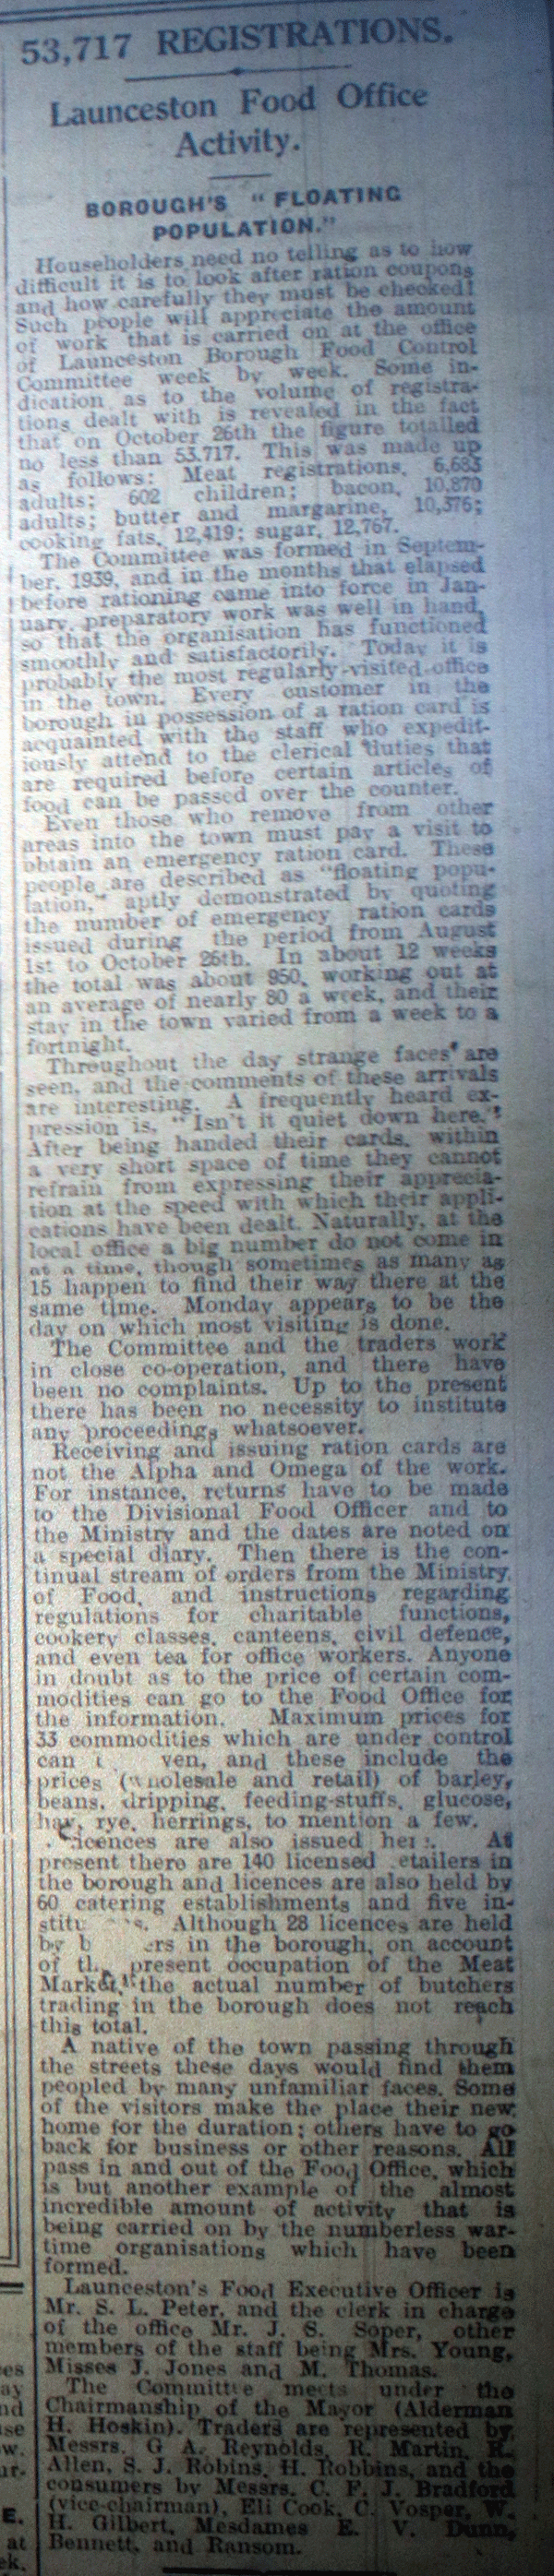 Launceston Food Office activity November 2nd, 1940.